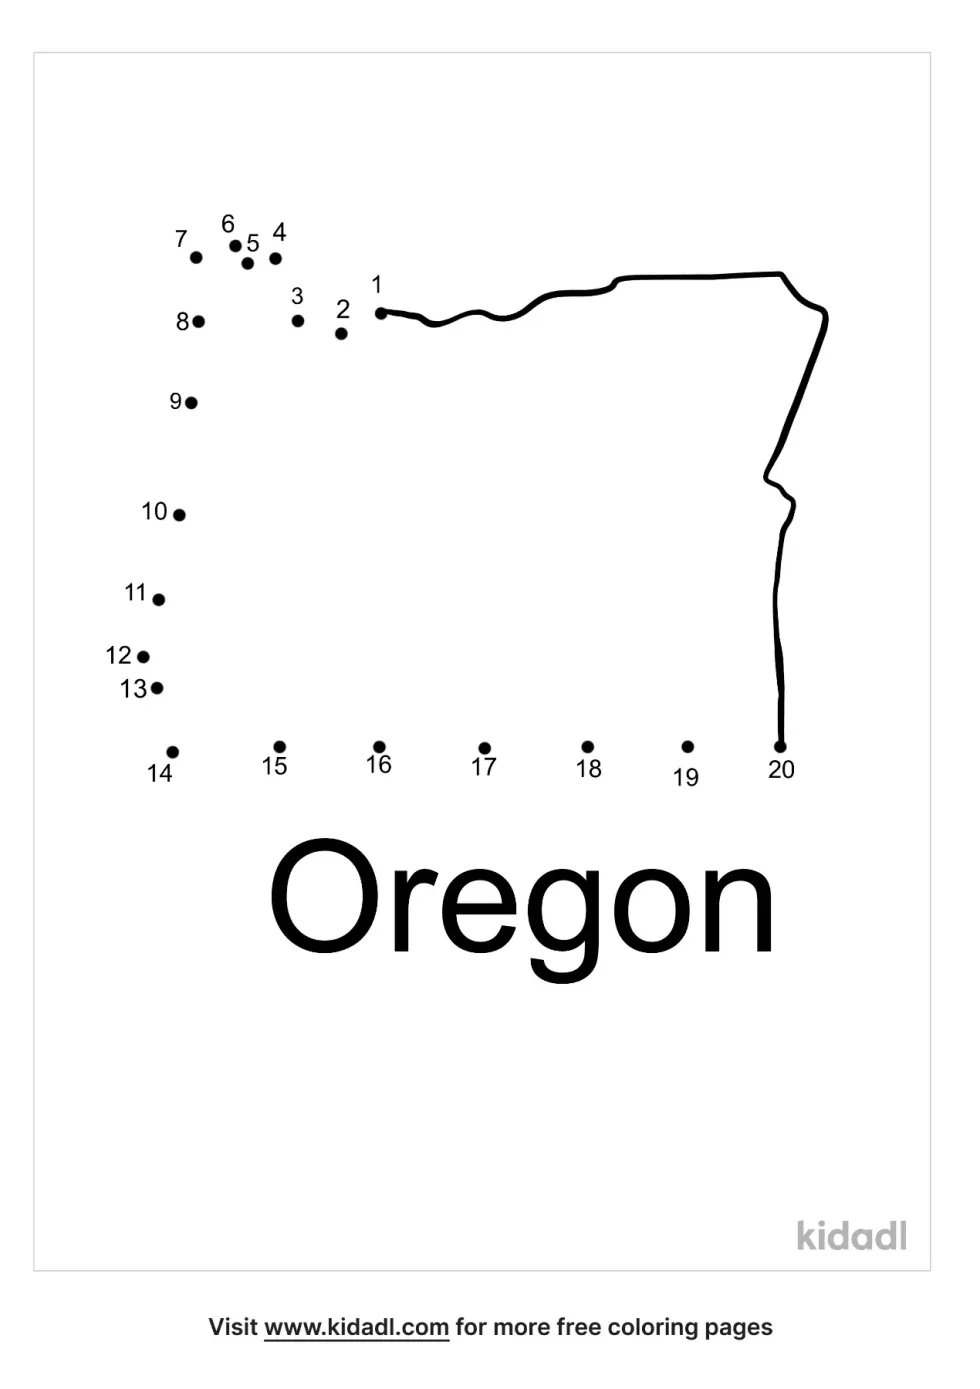 Oregon Dot To Dot (Easy)